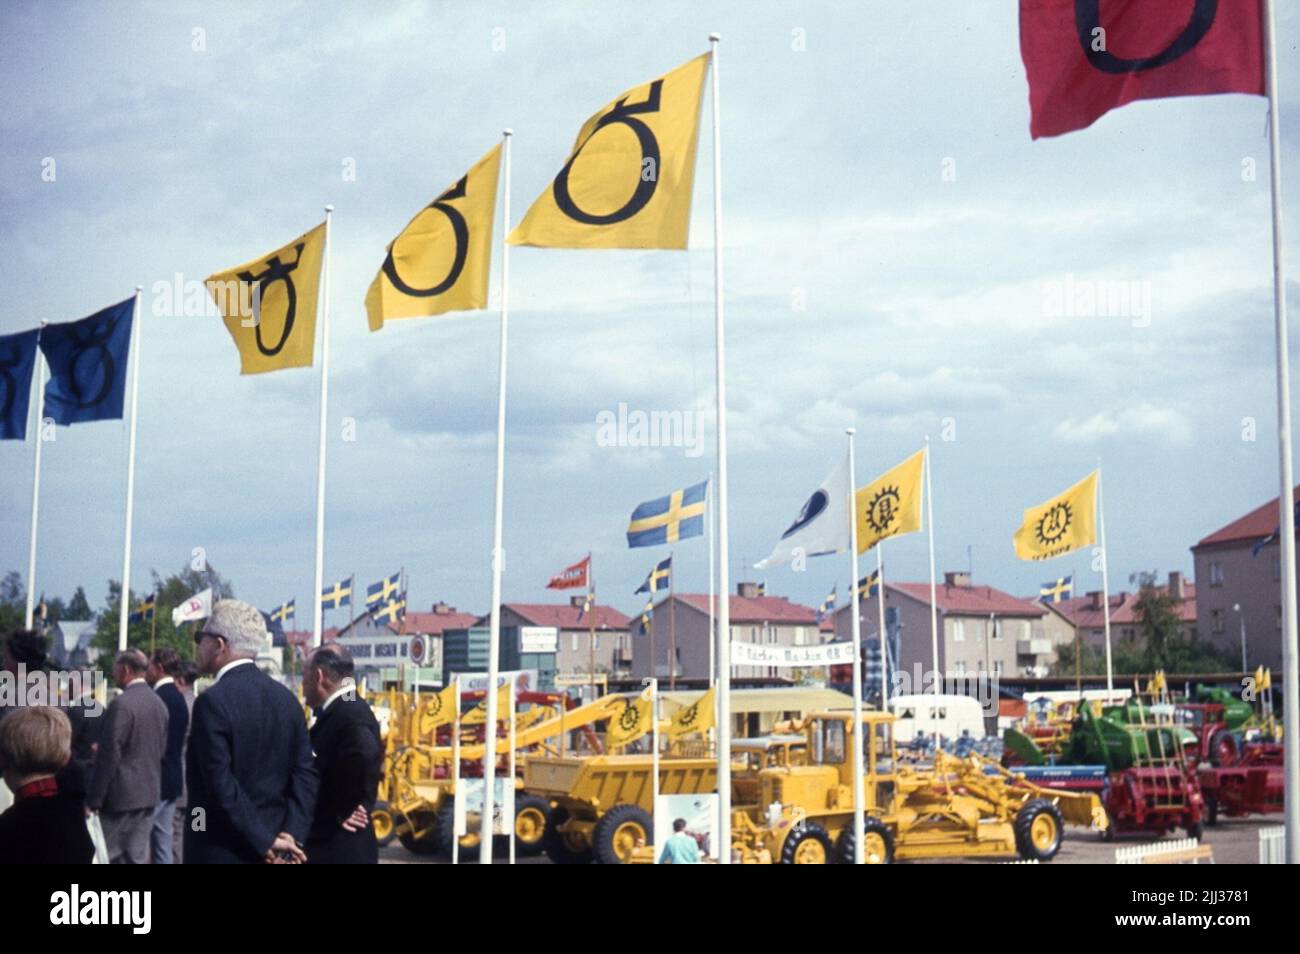 The anniversary exhibition Örebro 700 years, was held on June 4 - June 20  in Sveaparken, Sports